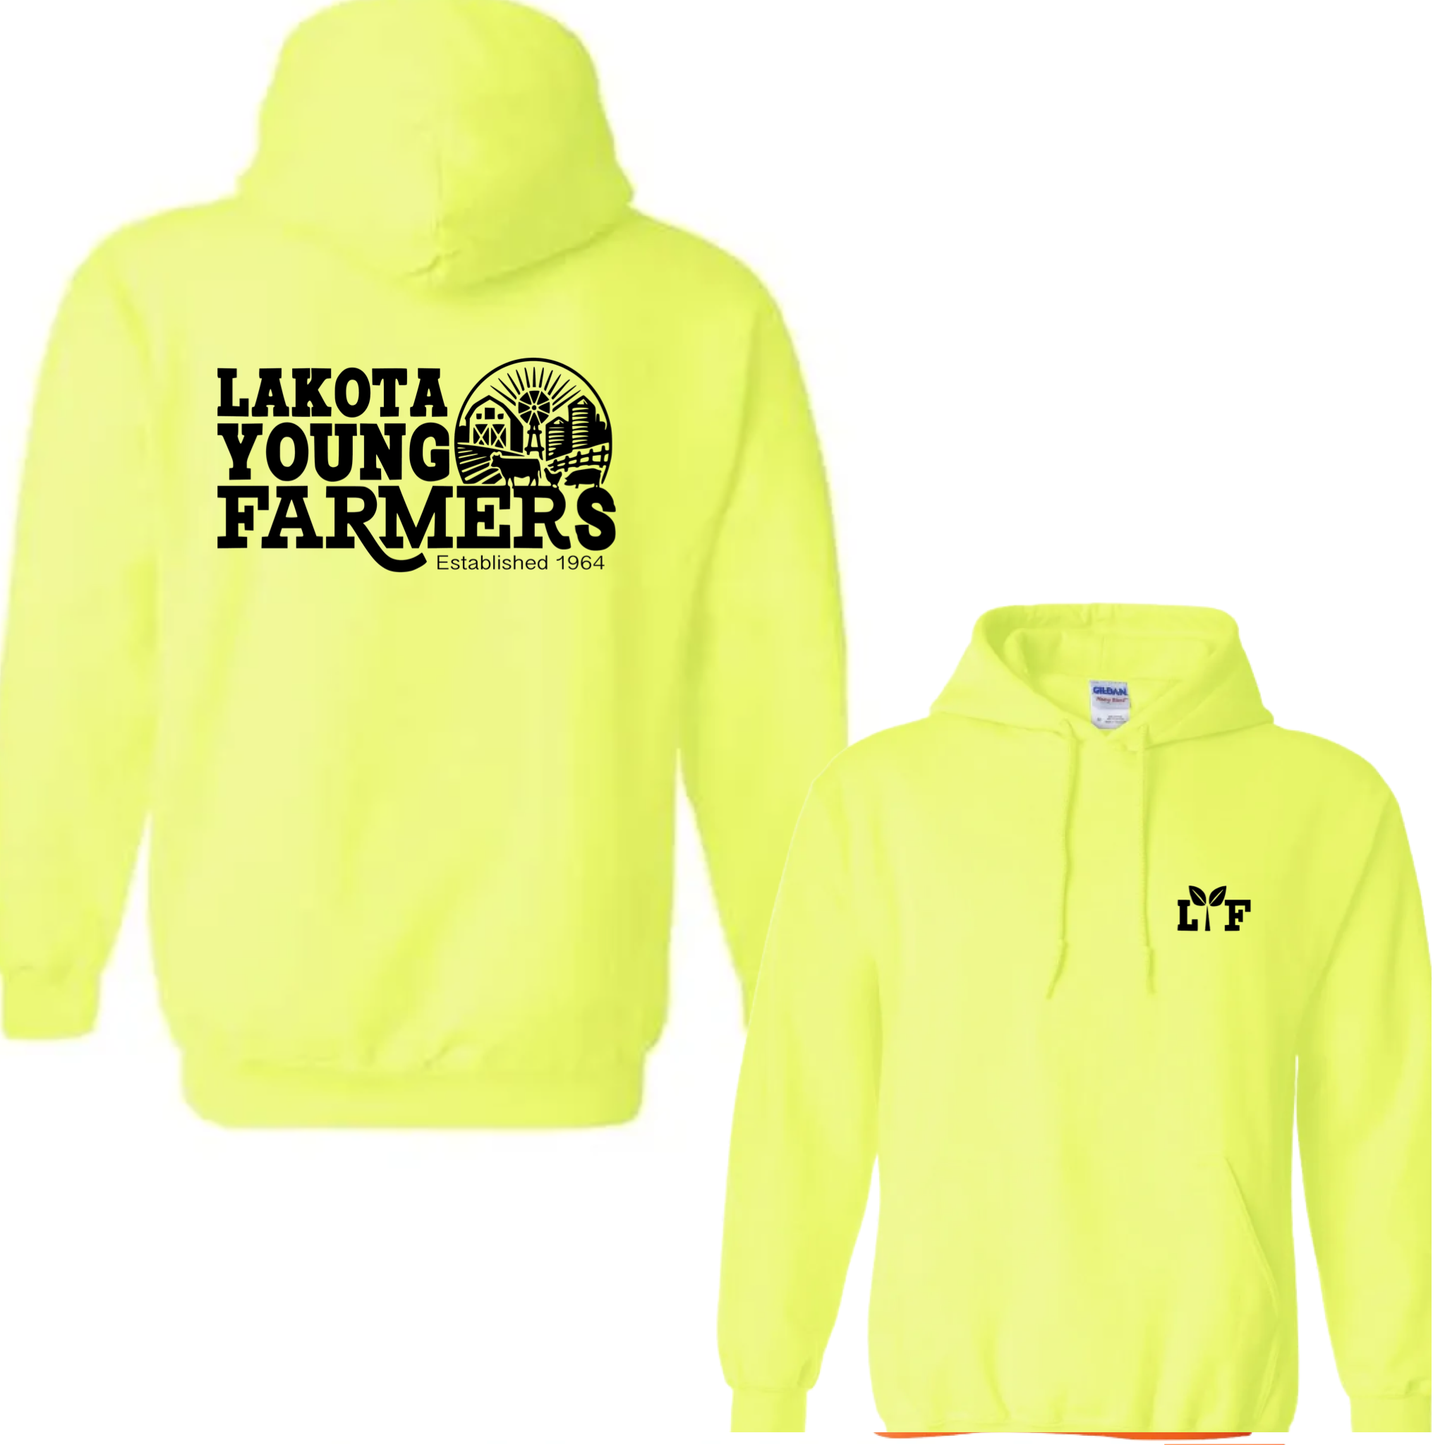 Lakota Young Farmers Adult Hoodies and Sweatshirts